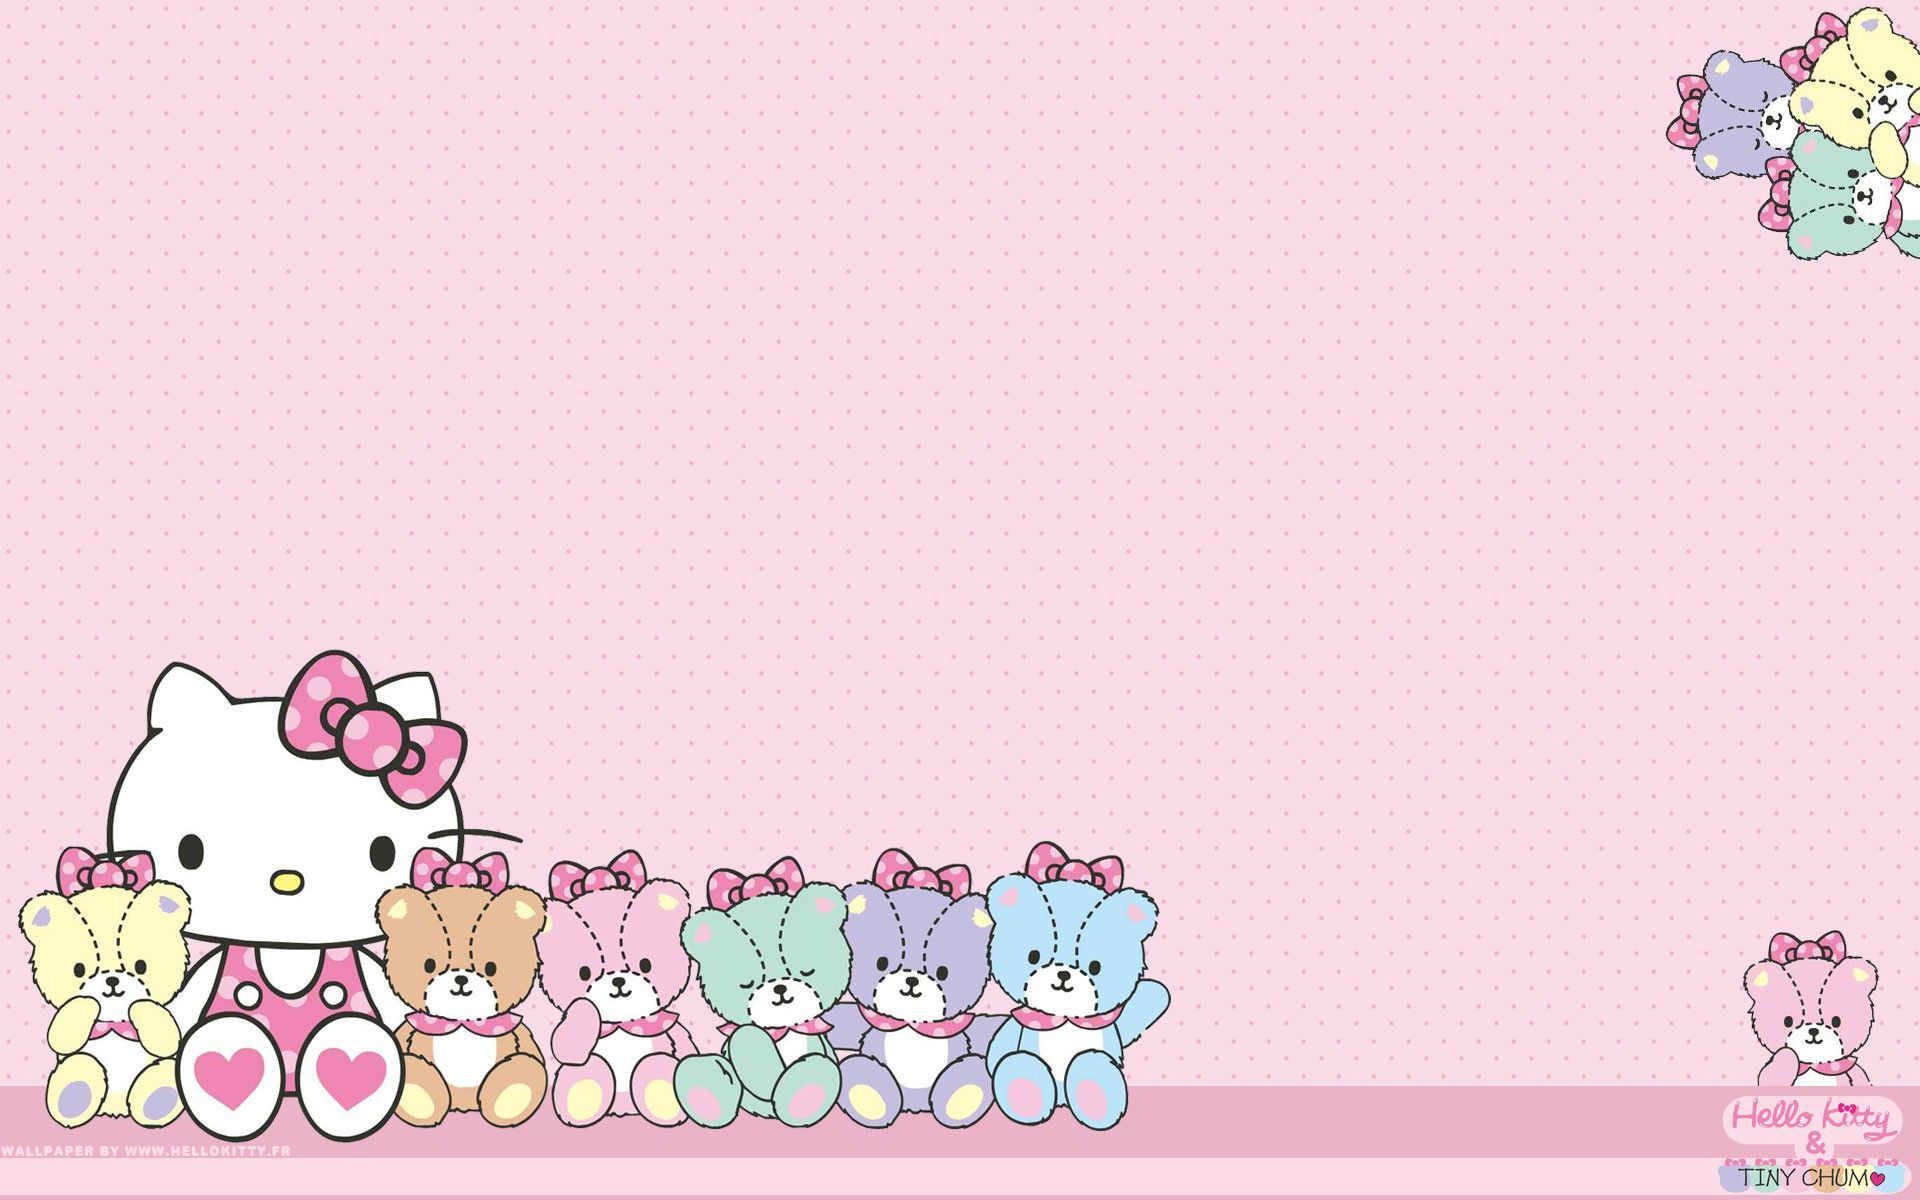 Hello Kitty wallpaper for your computer desktop. - Hello Kitty